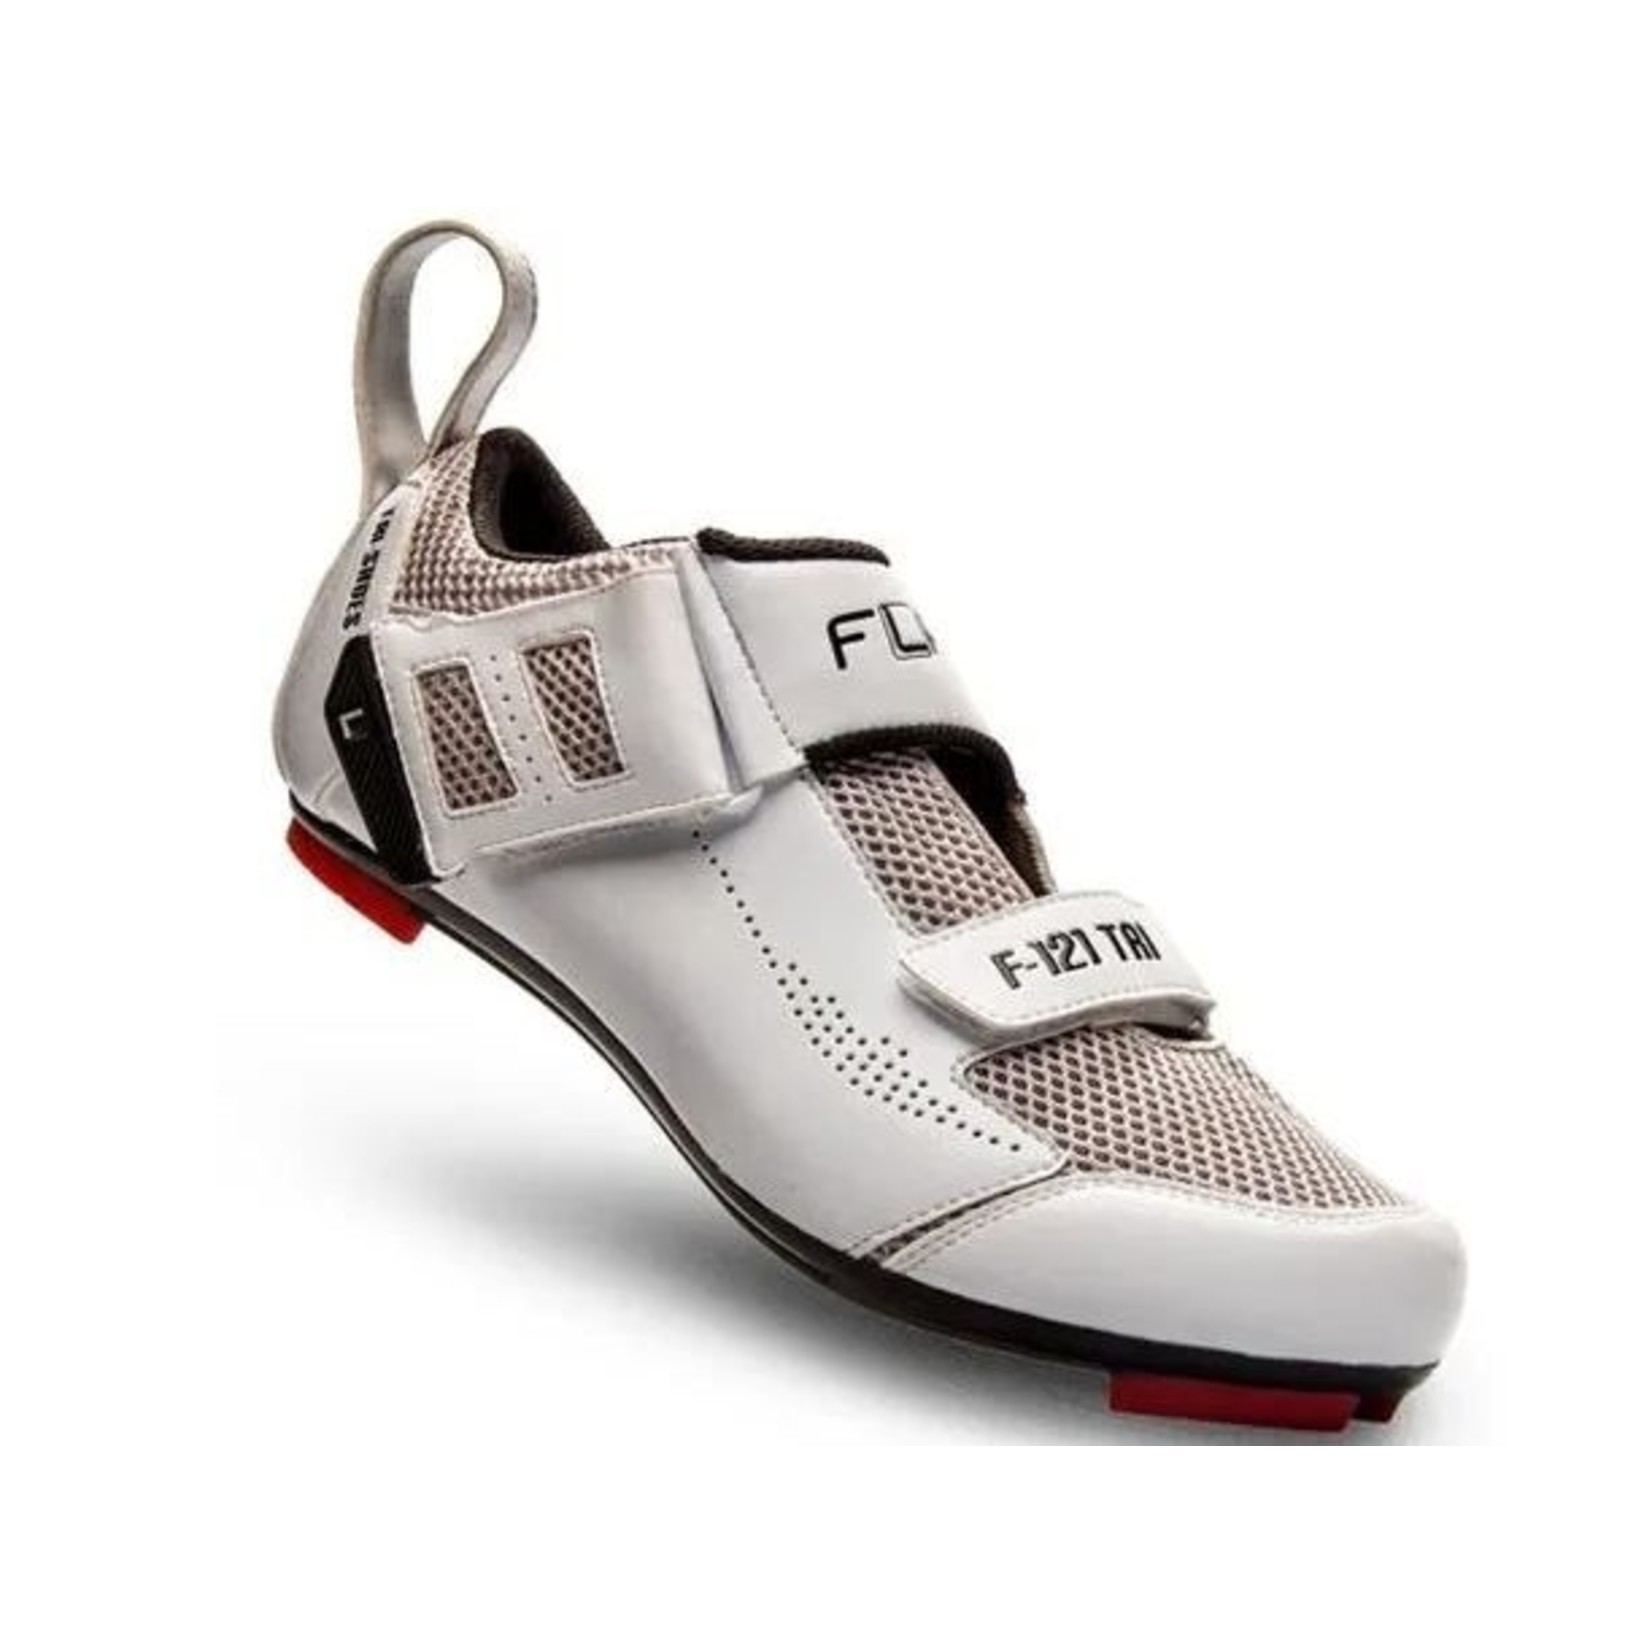 FLR FLR F-121 - Triathlon Shoes - R250 outsole - Pull handle - Size 44 - White